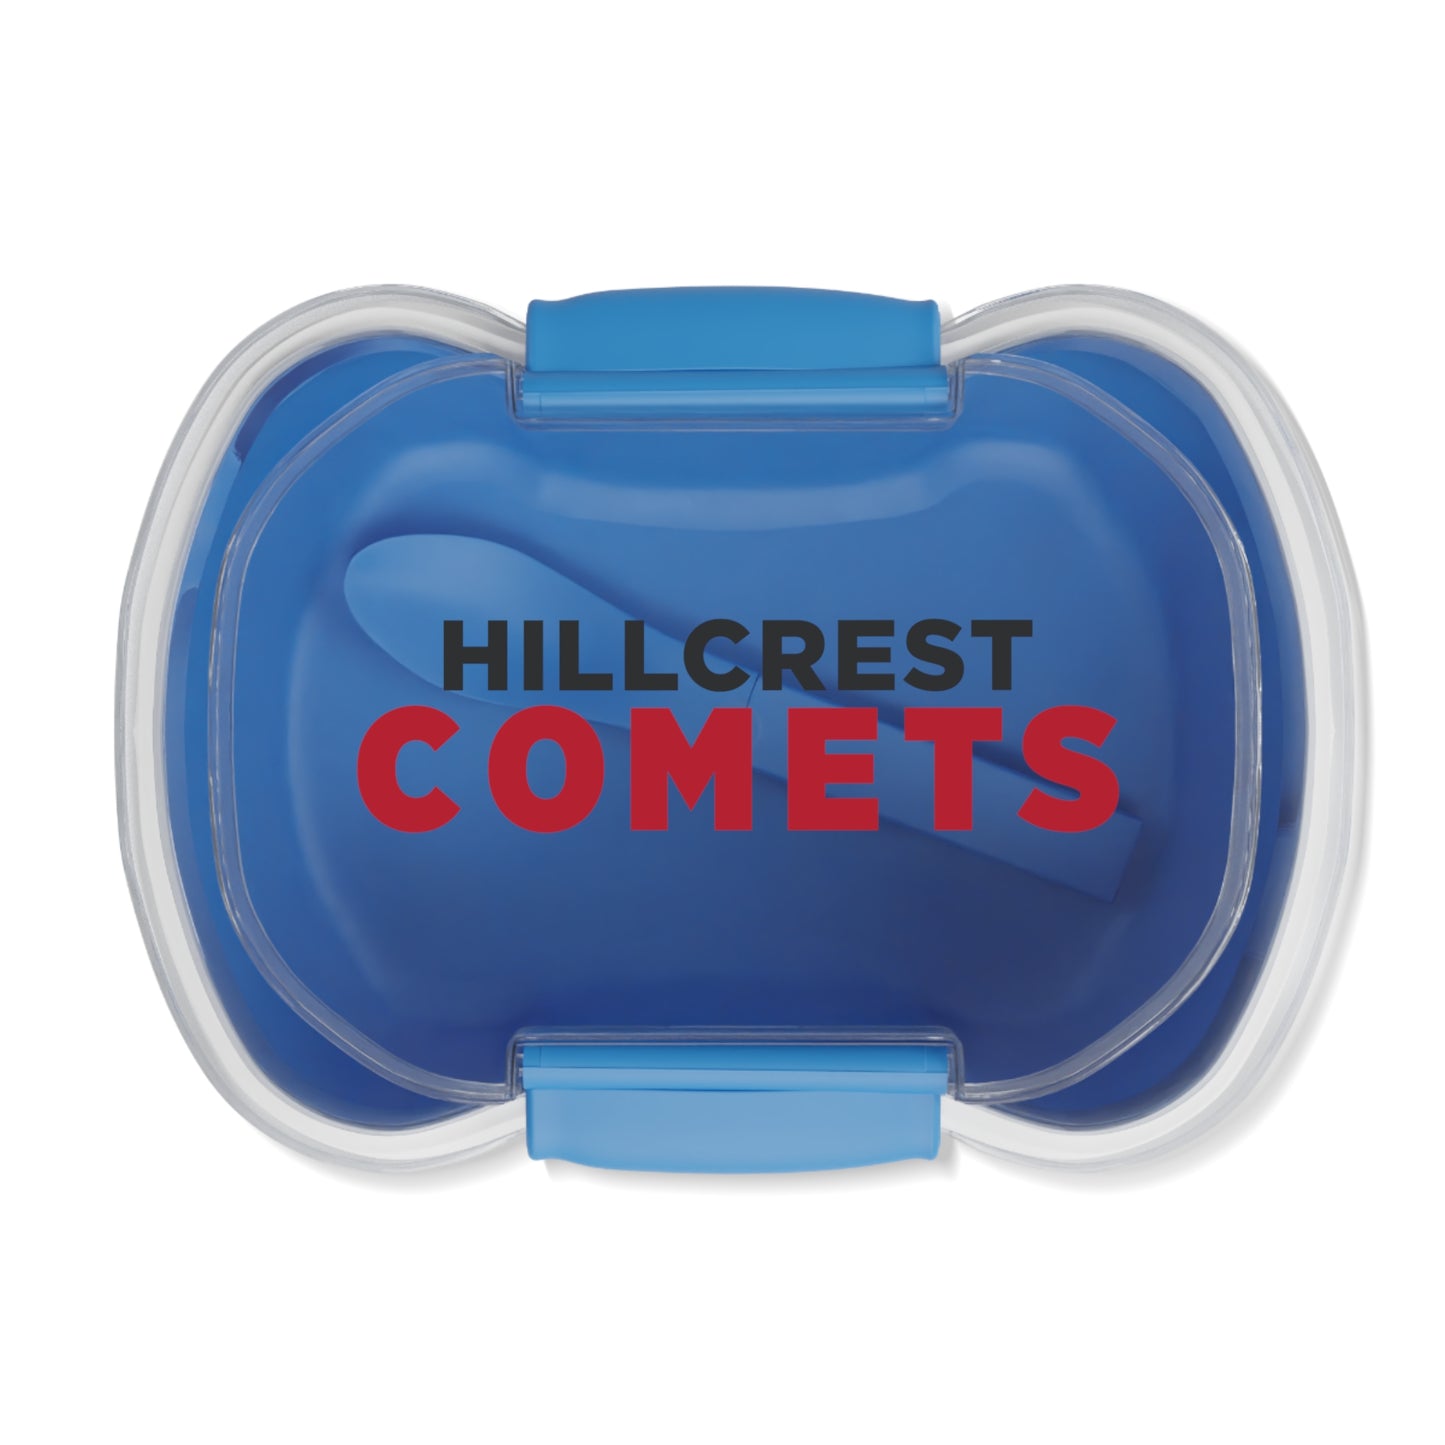 Hillcrest Comets - Two-tier Bento Box